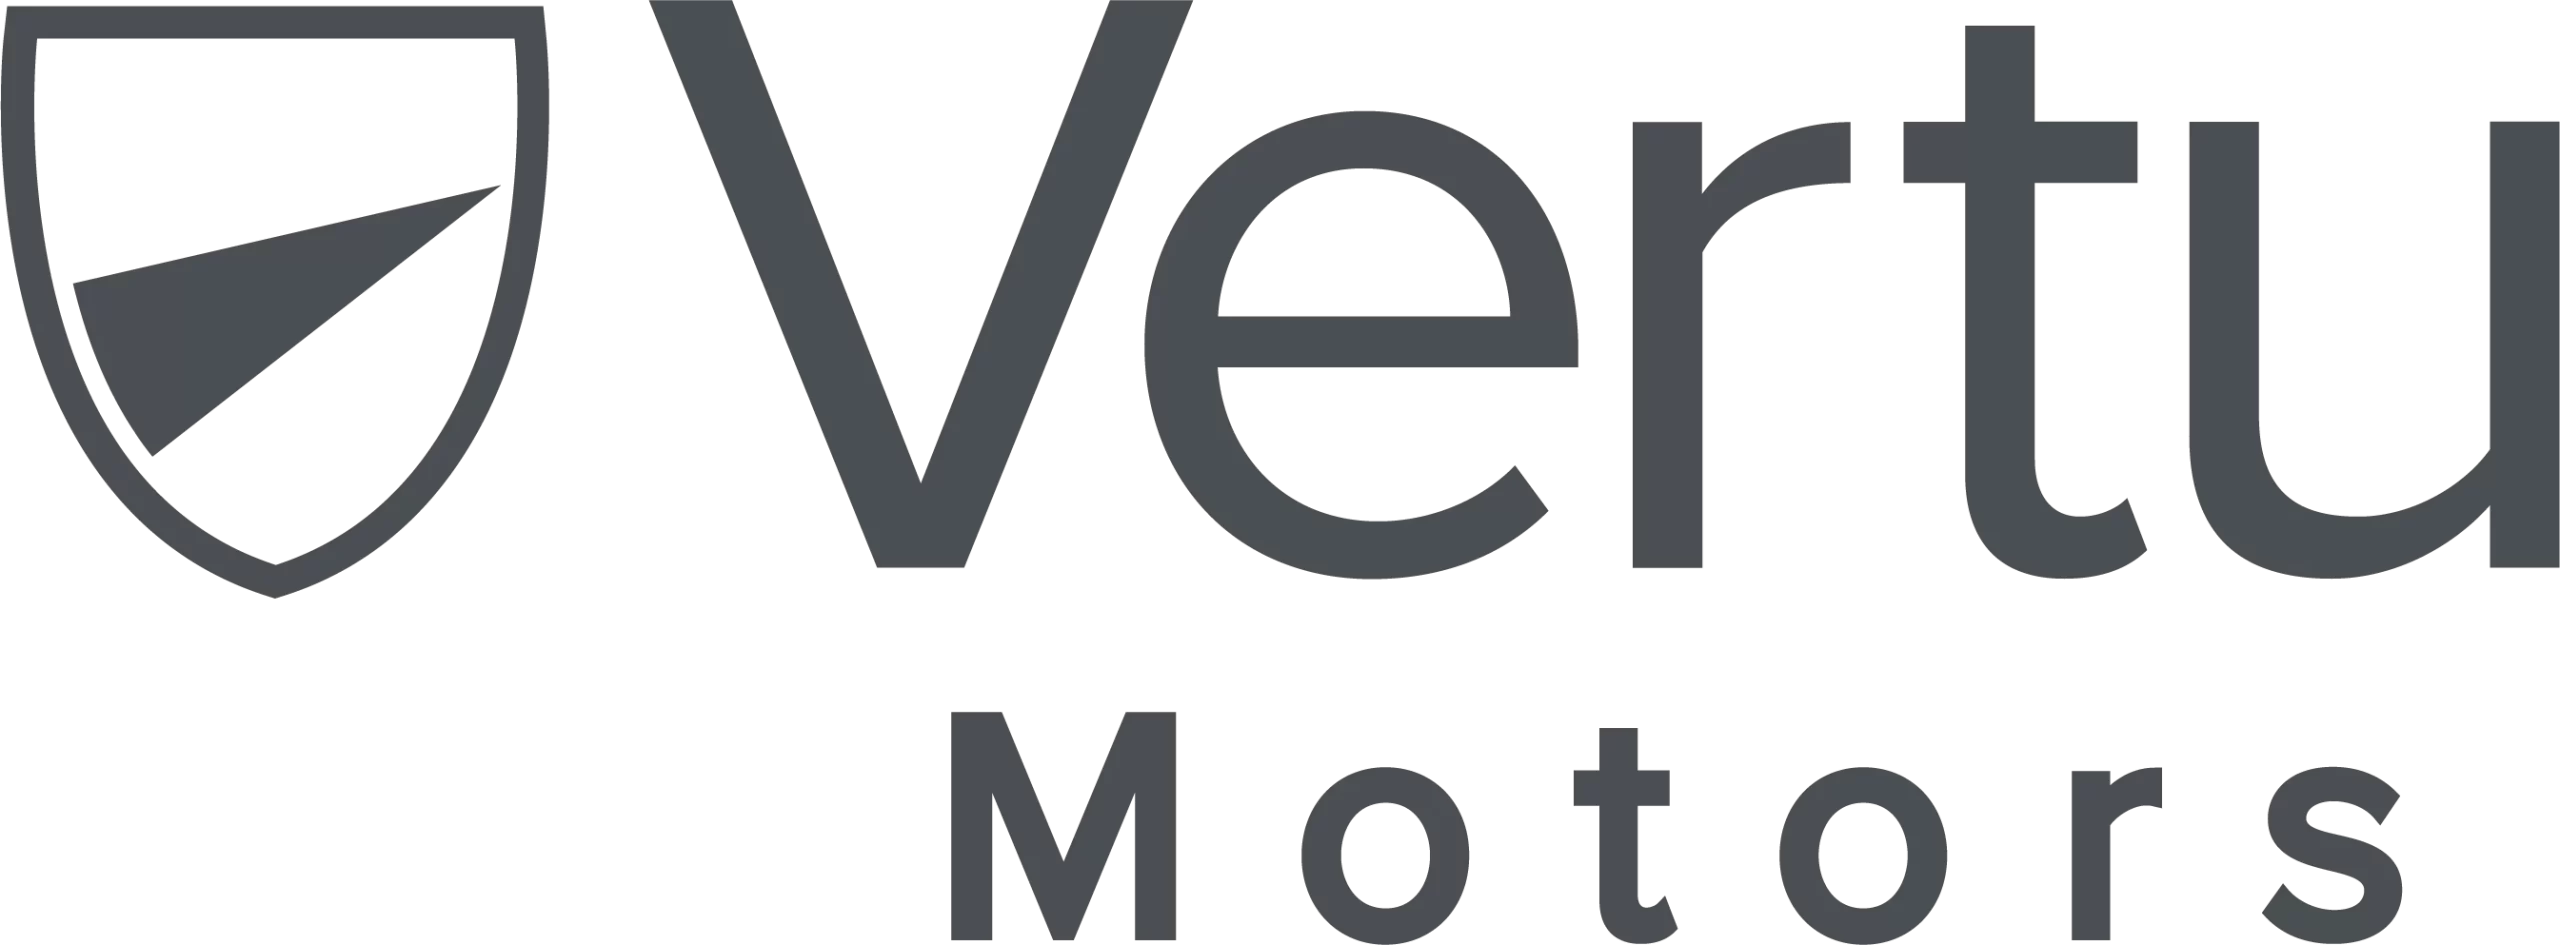 Vertu Motors logo in dark